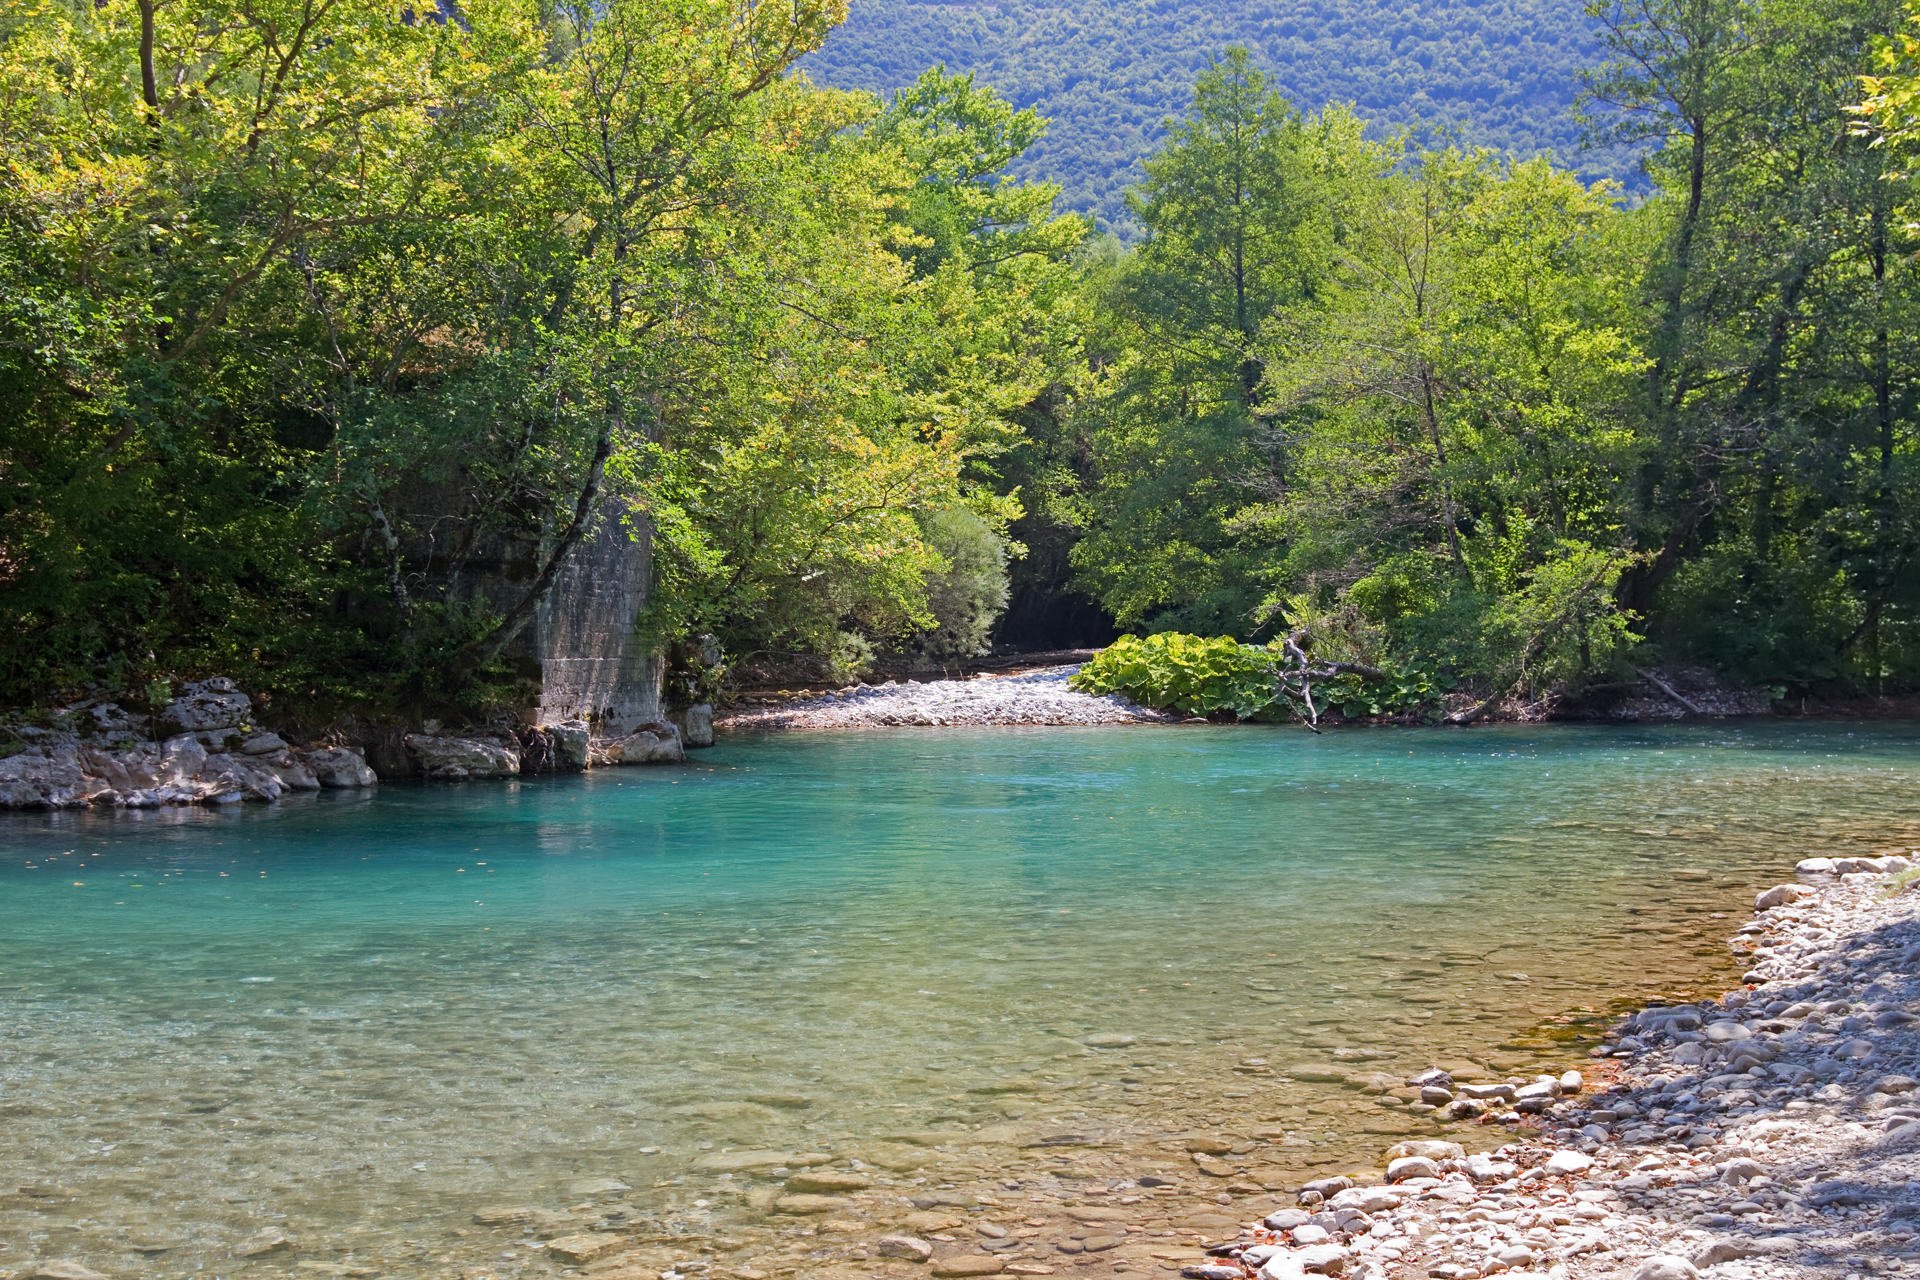  The blue waters of Voidomatis river that flows through Epirus region, Greece